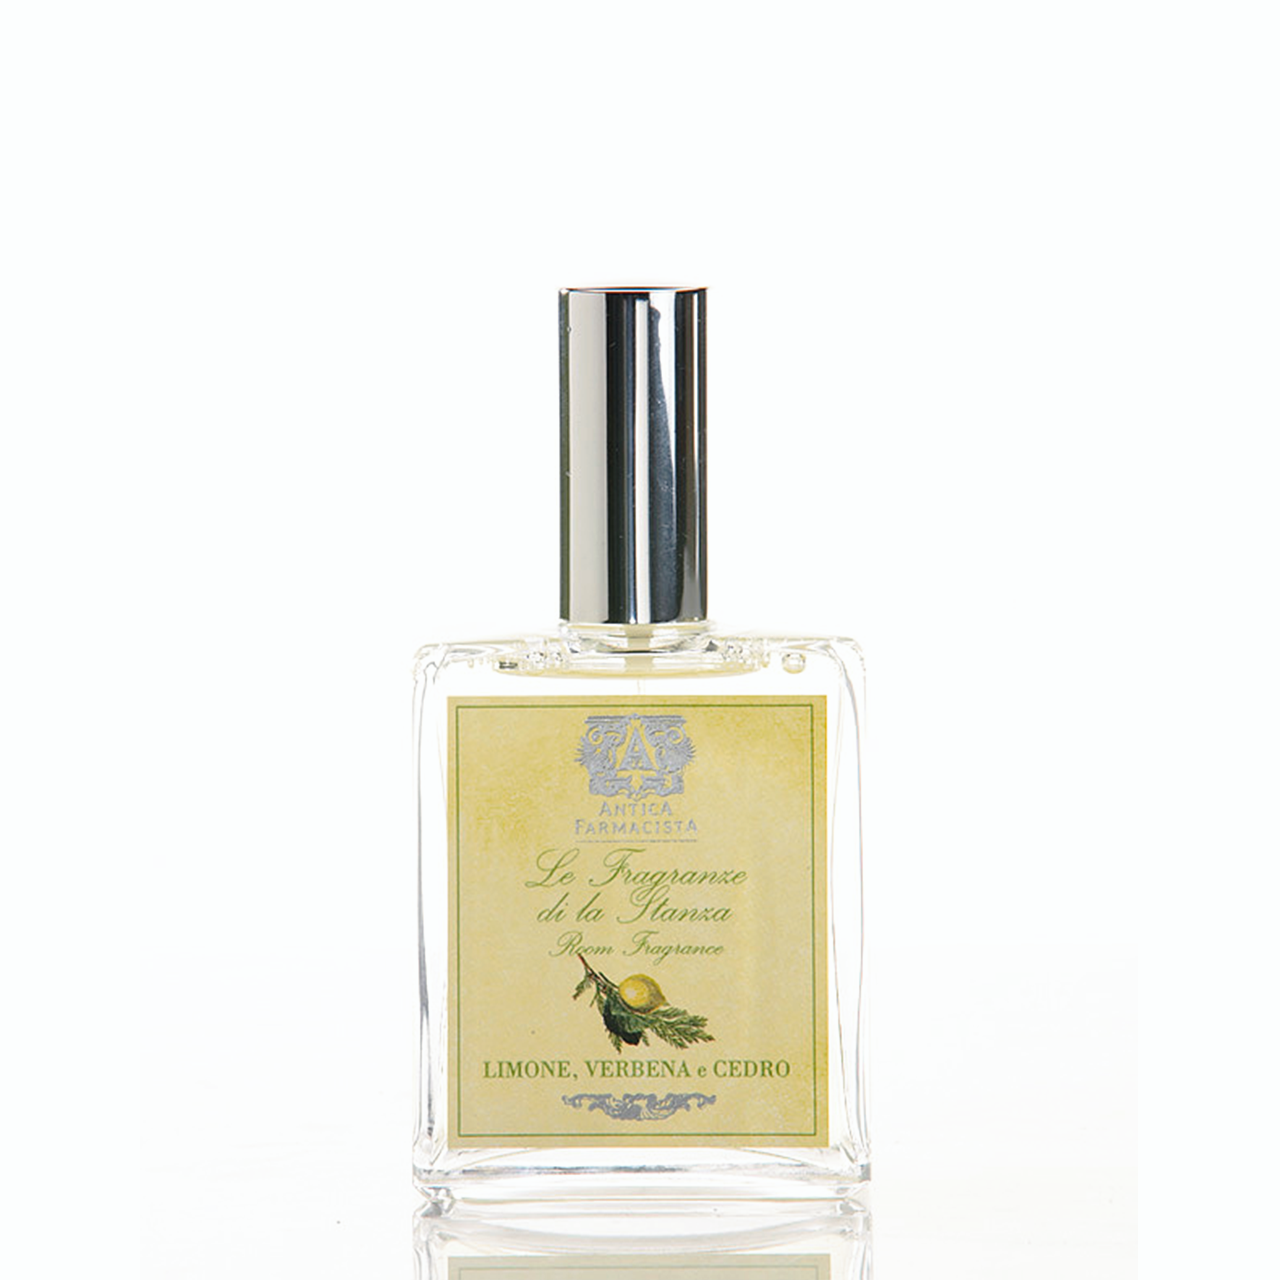 Lemon Verbena Fragrance Gift Set